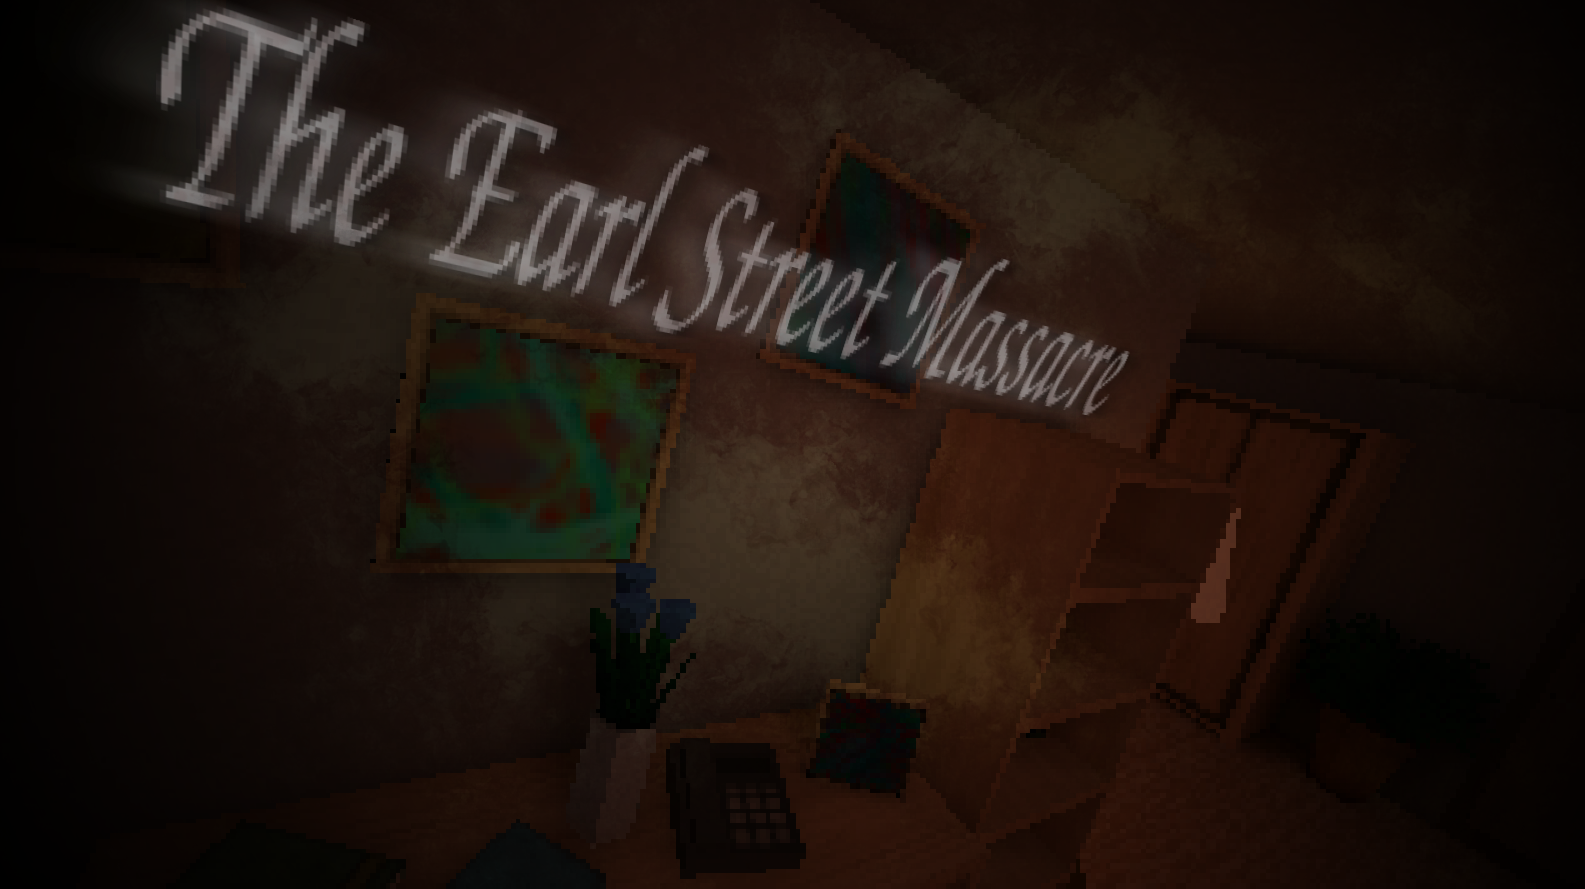 The Earl Street Massacre